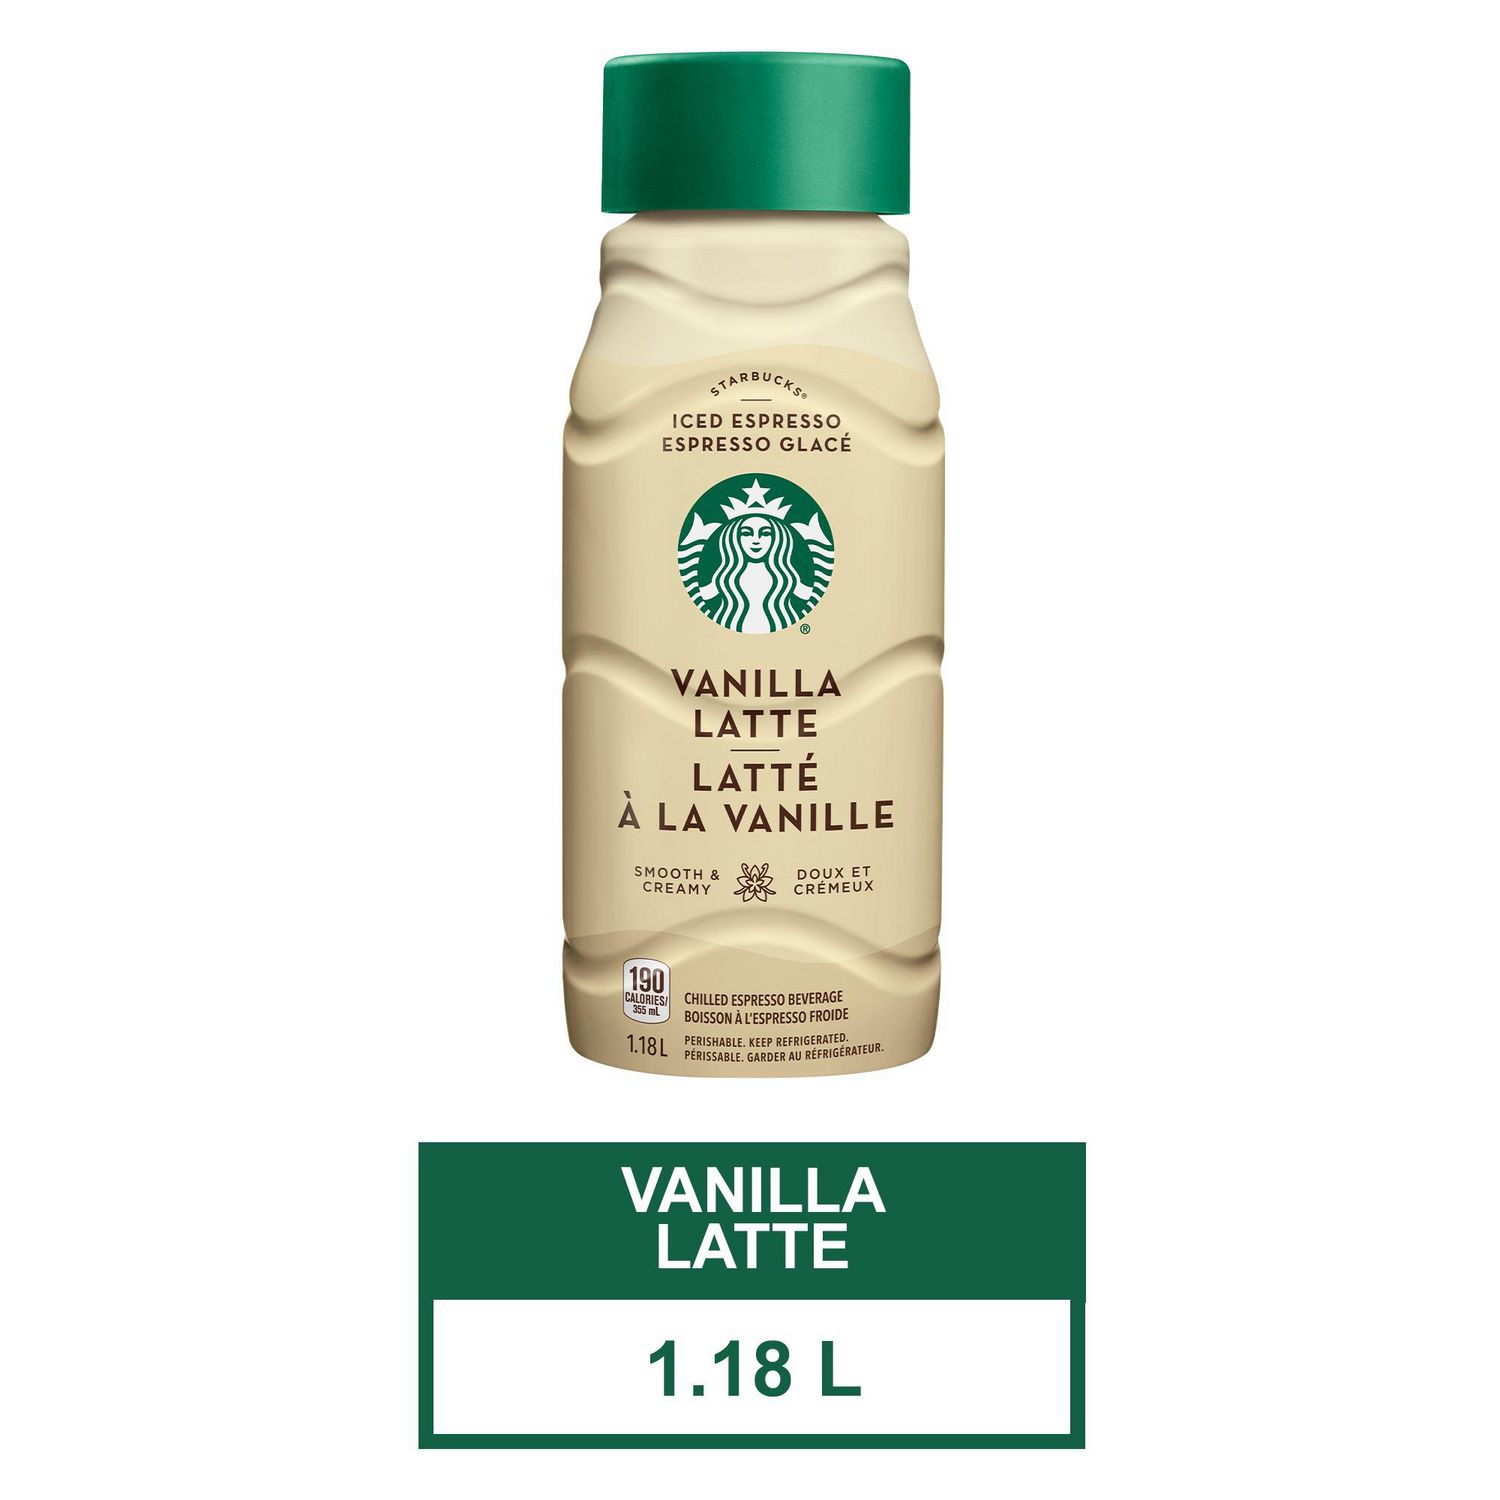 Starbucks Iced Espresso Classic Vanilla Latte, 1.18L Bottle | Walmart ...